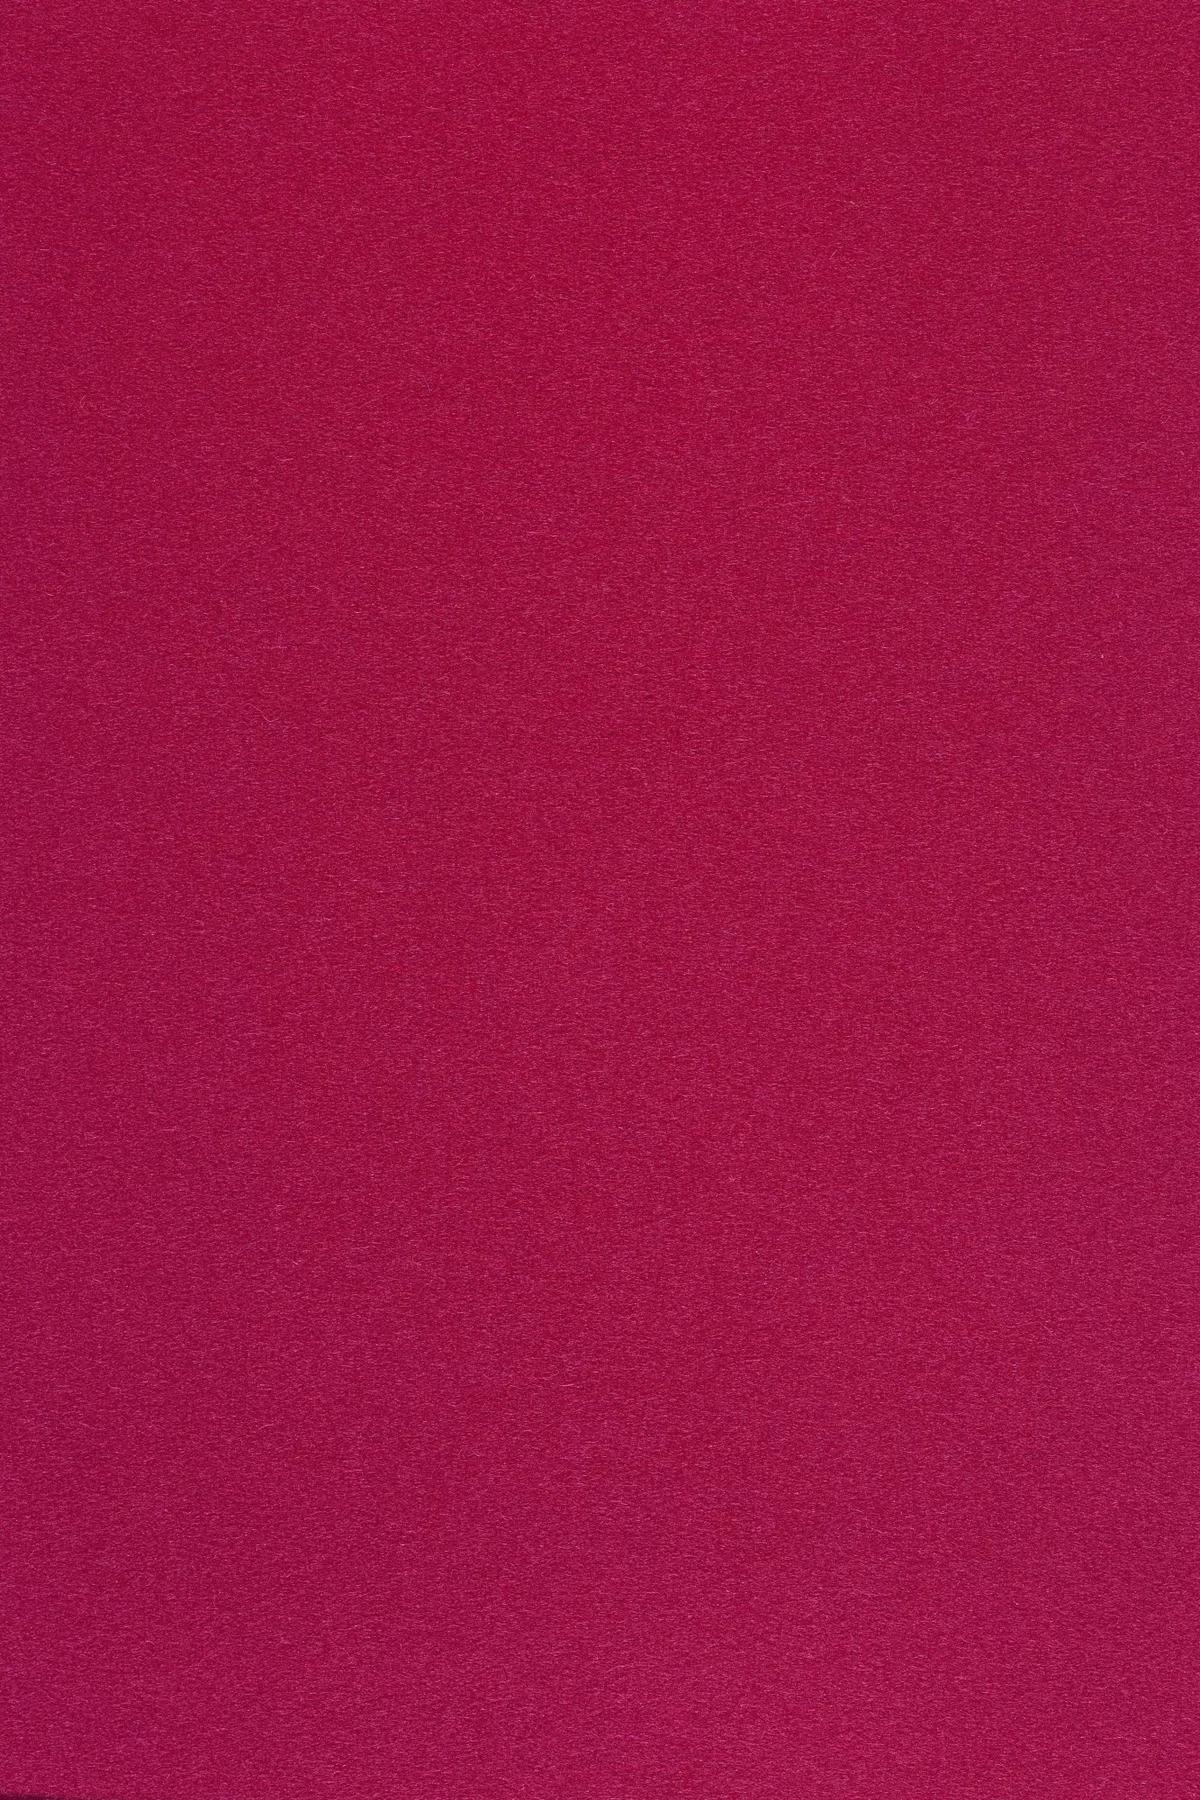 Fabric sample Divina 3 636 pink